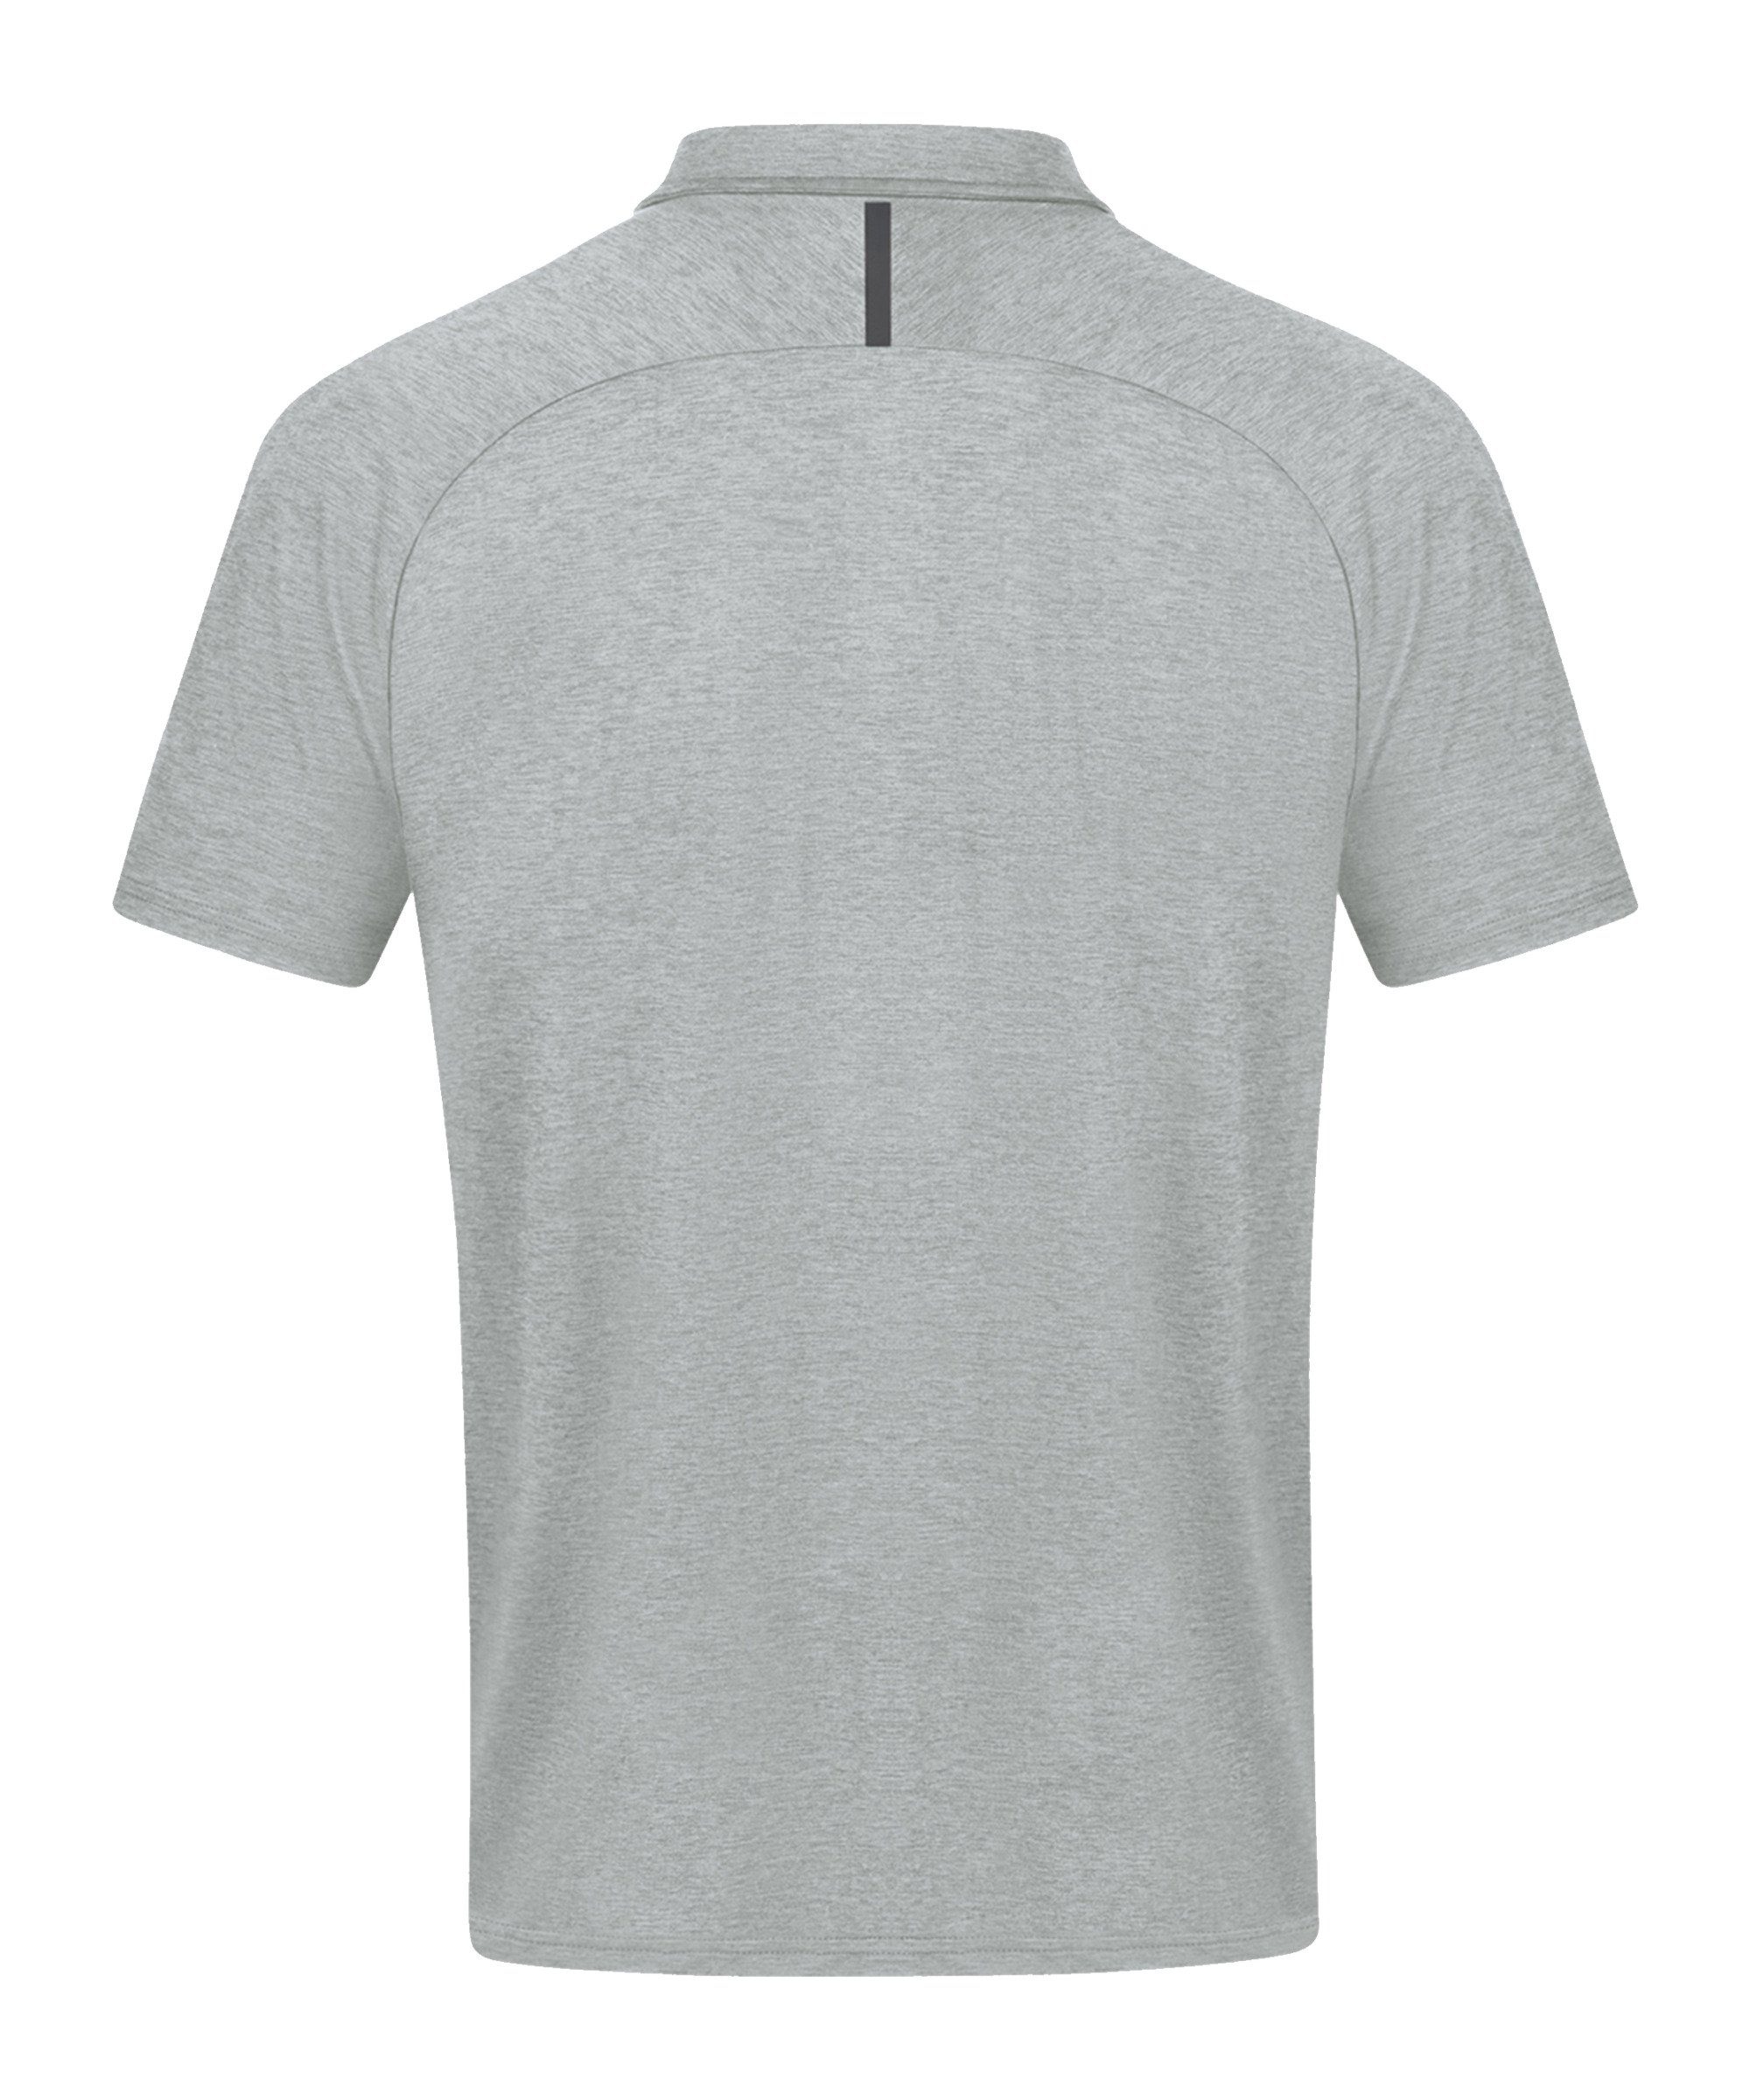 Challenge default Jako Polo T-Shirt graugrau